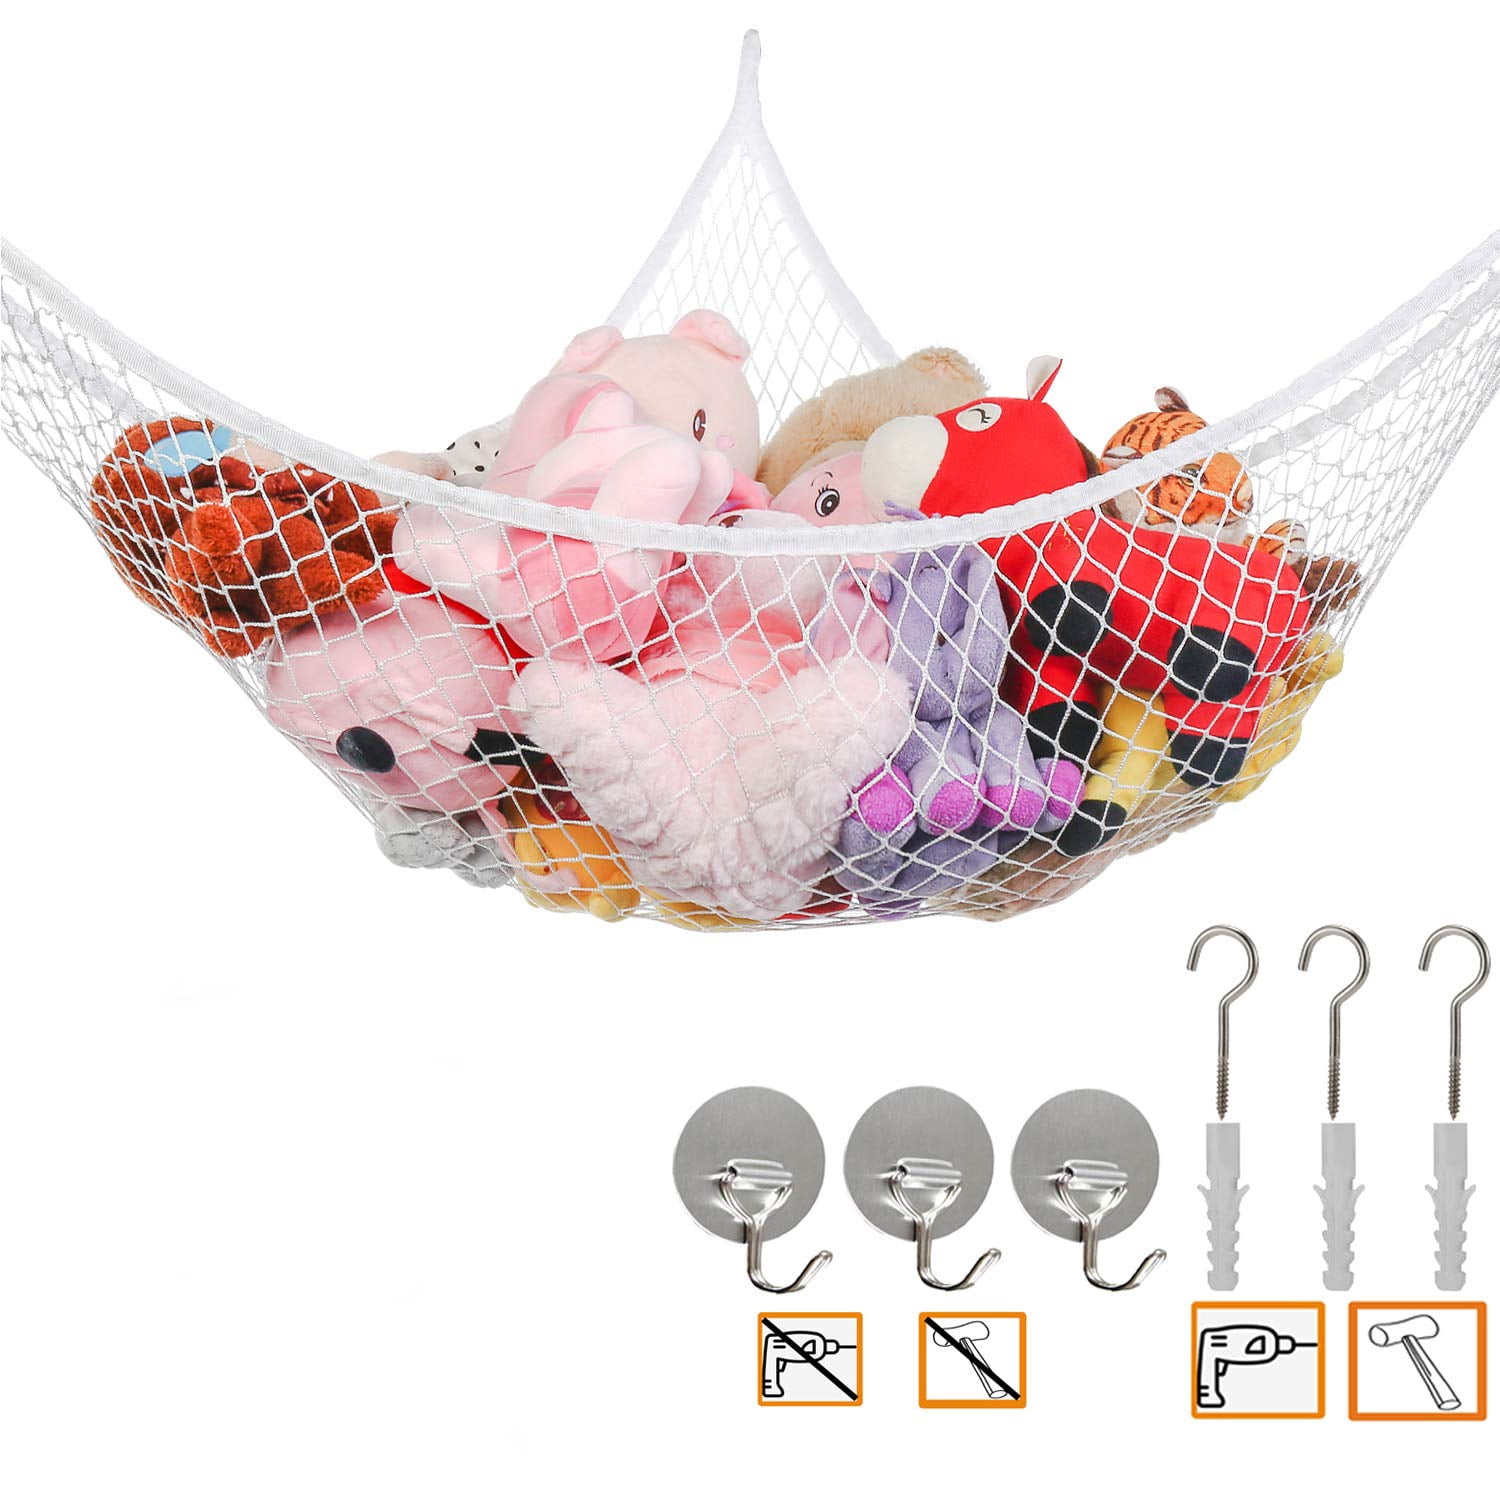 Organize stuffed animals or children Jumbo Toy Hammock 